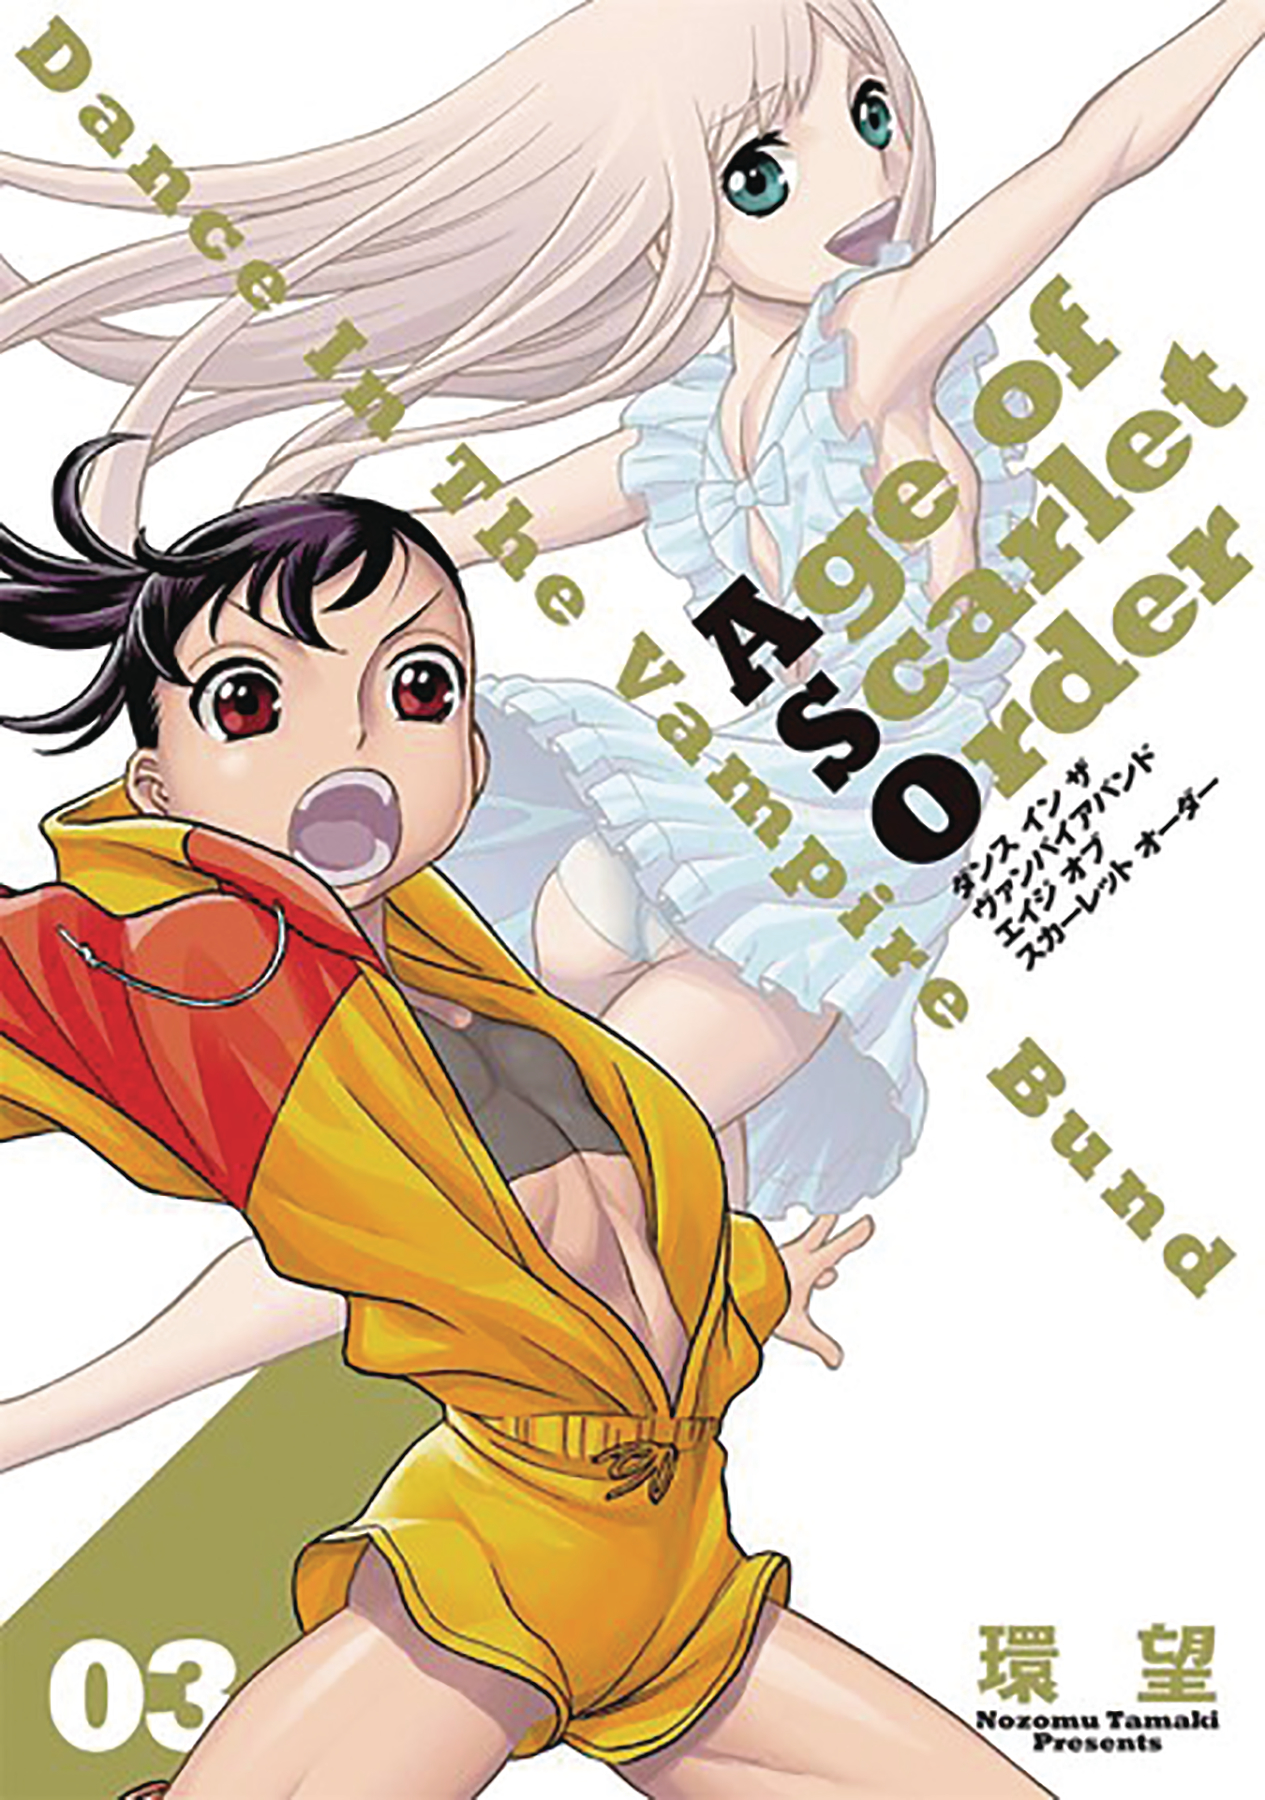 Dance in the Vampire Bund Age of Scarlet Order Manga Volume 3 (Mature)